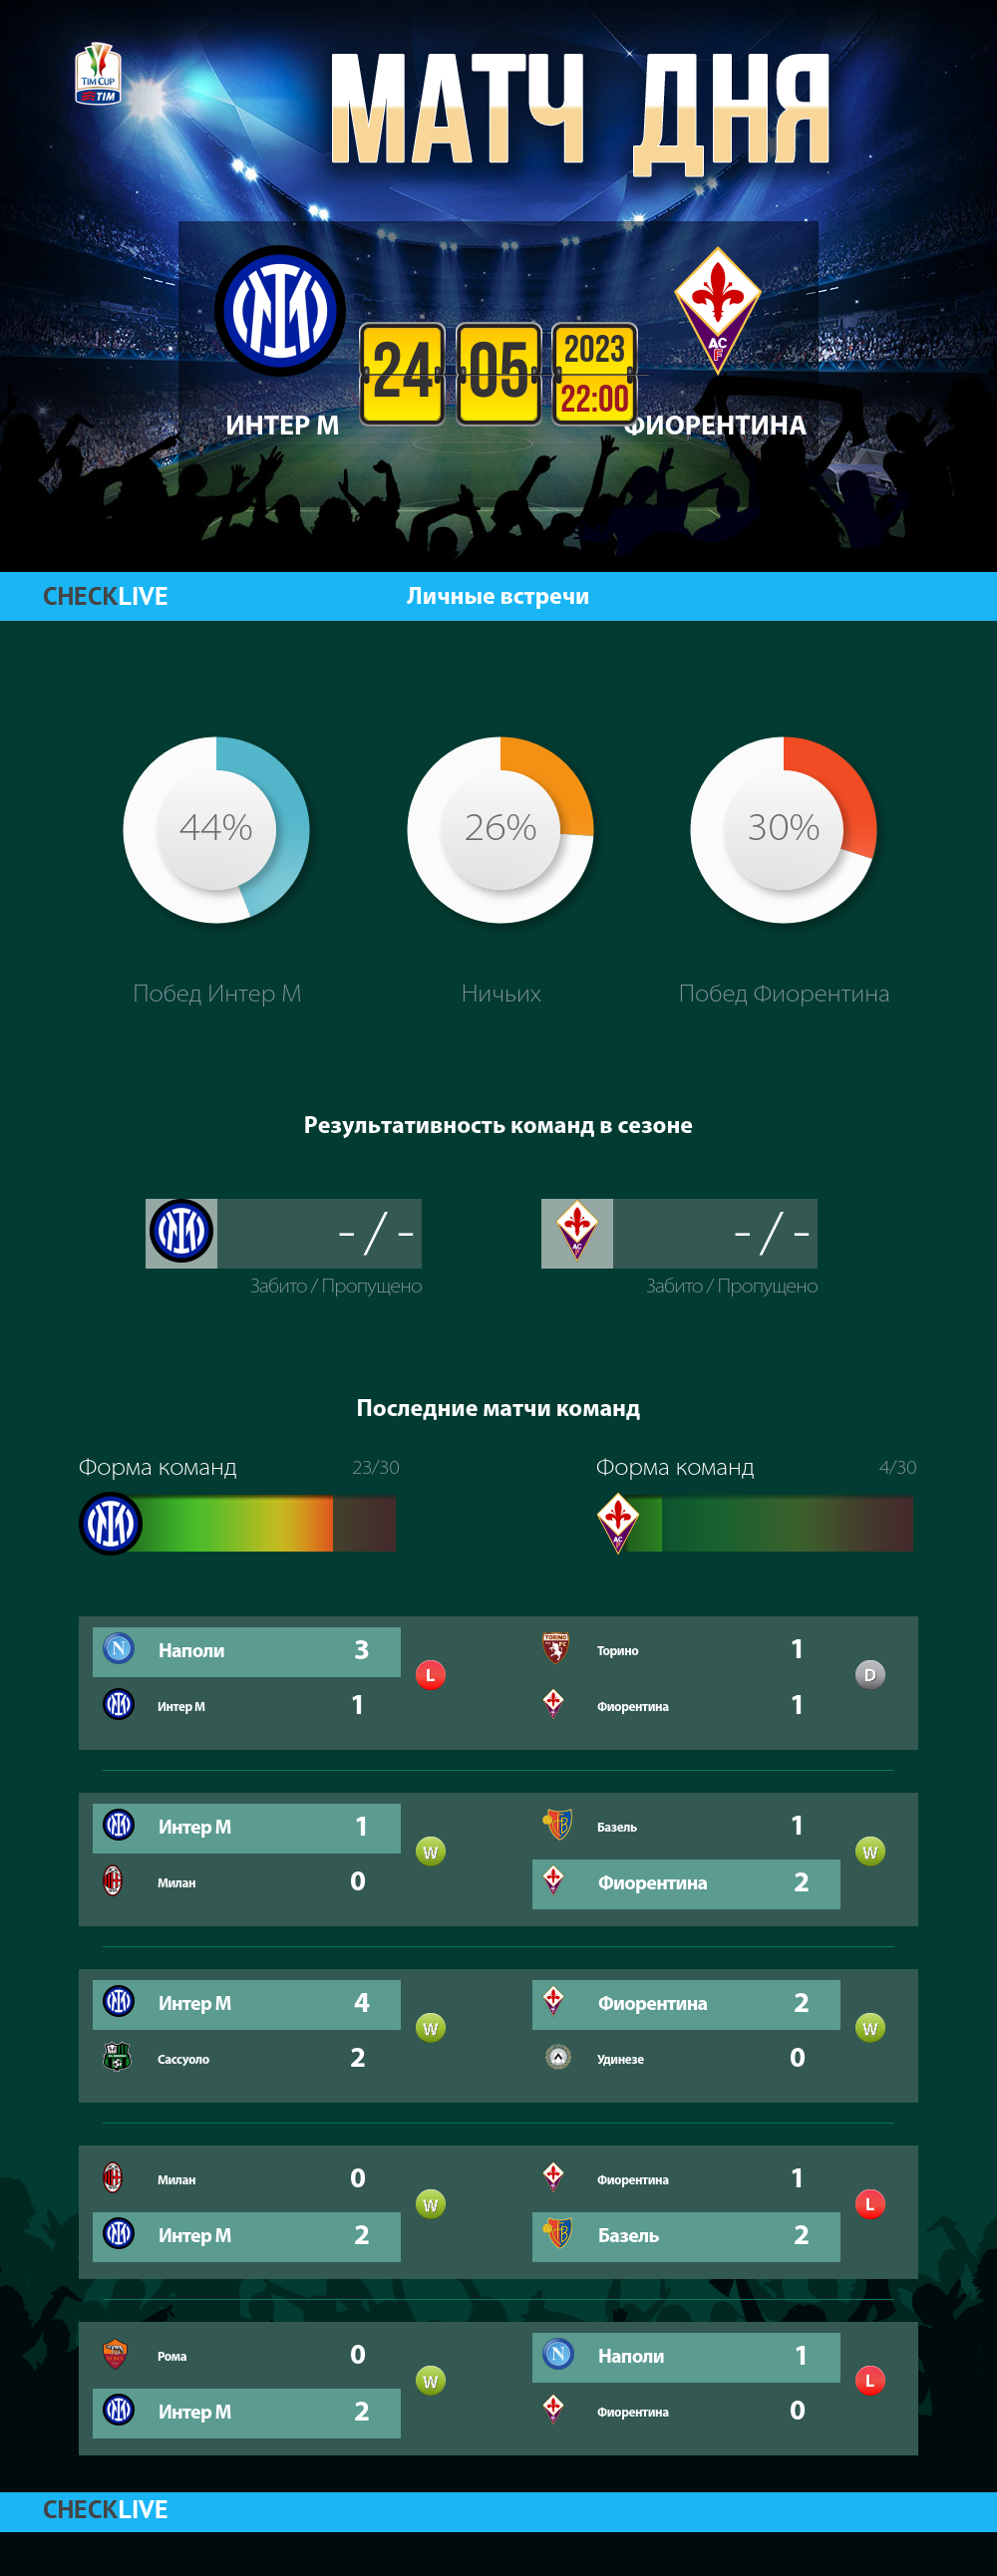 Инфографика Интер М и Фиорентина матч дня 24.05.2023